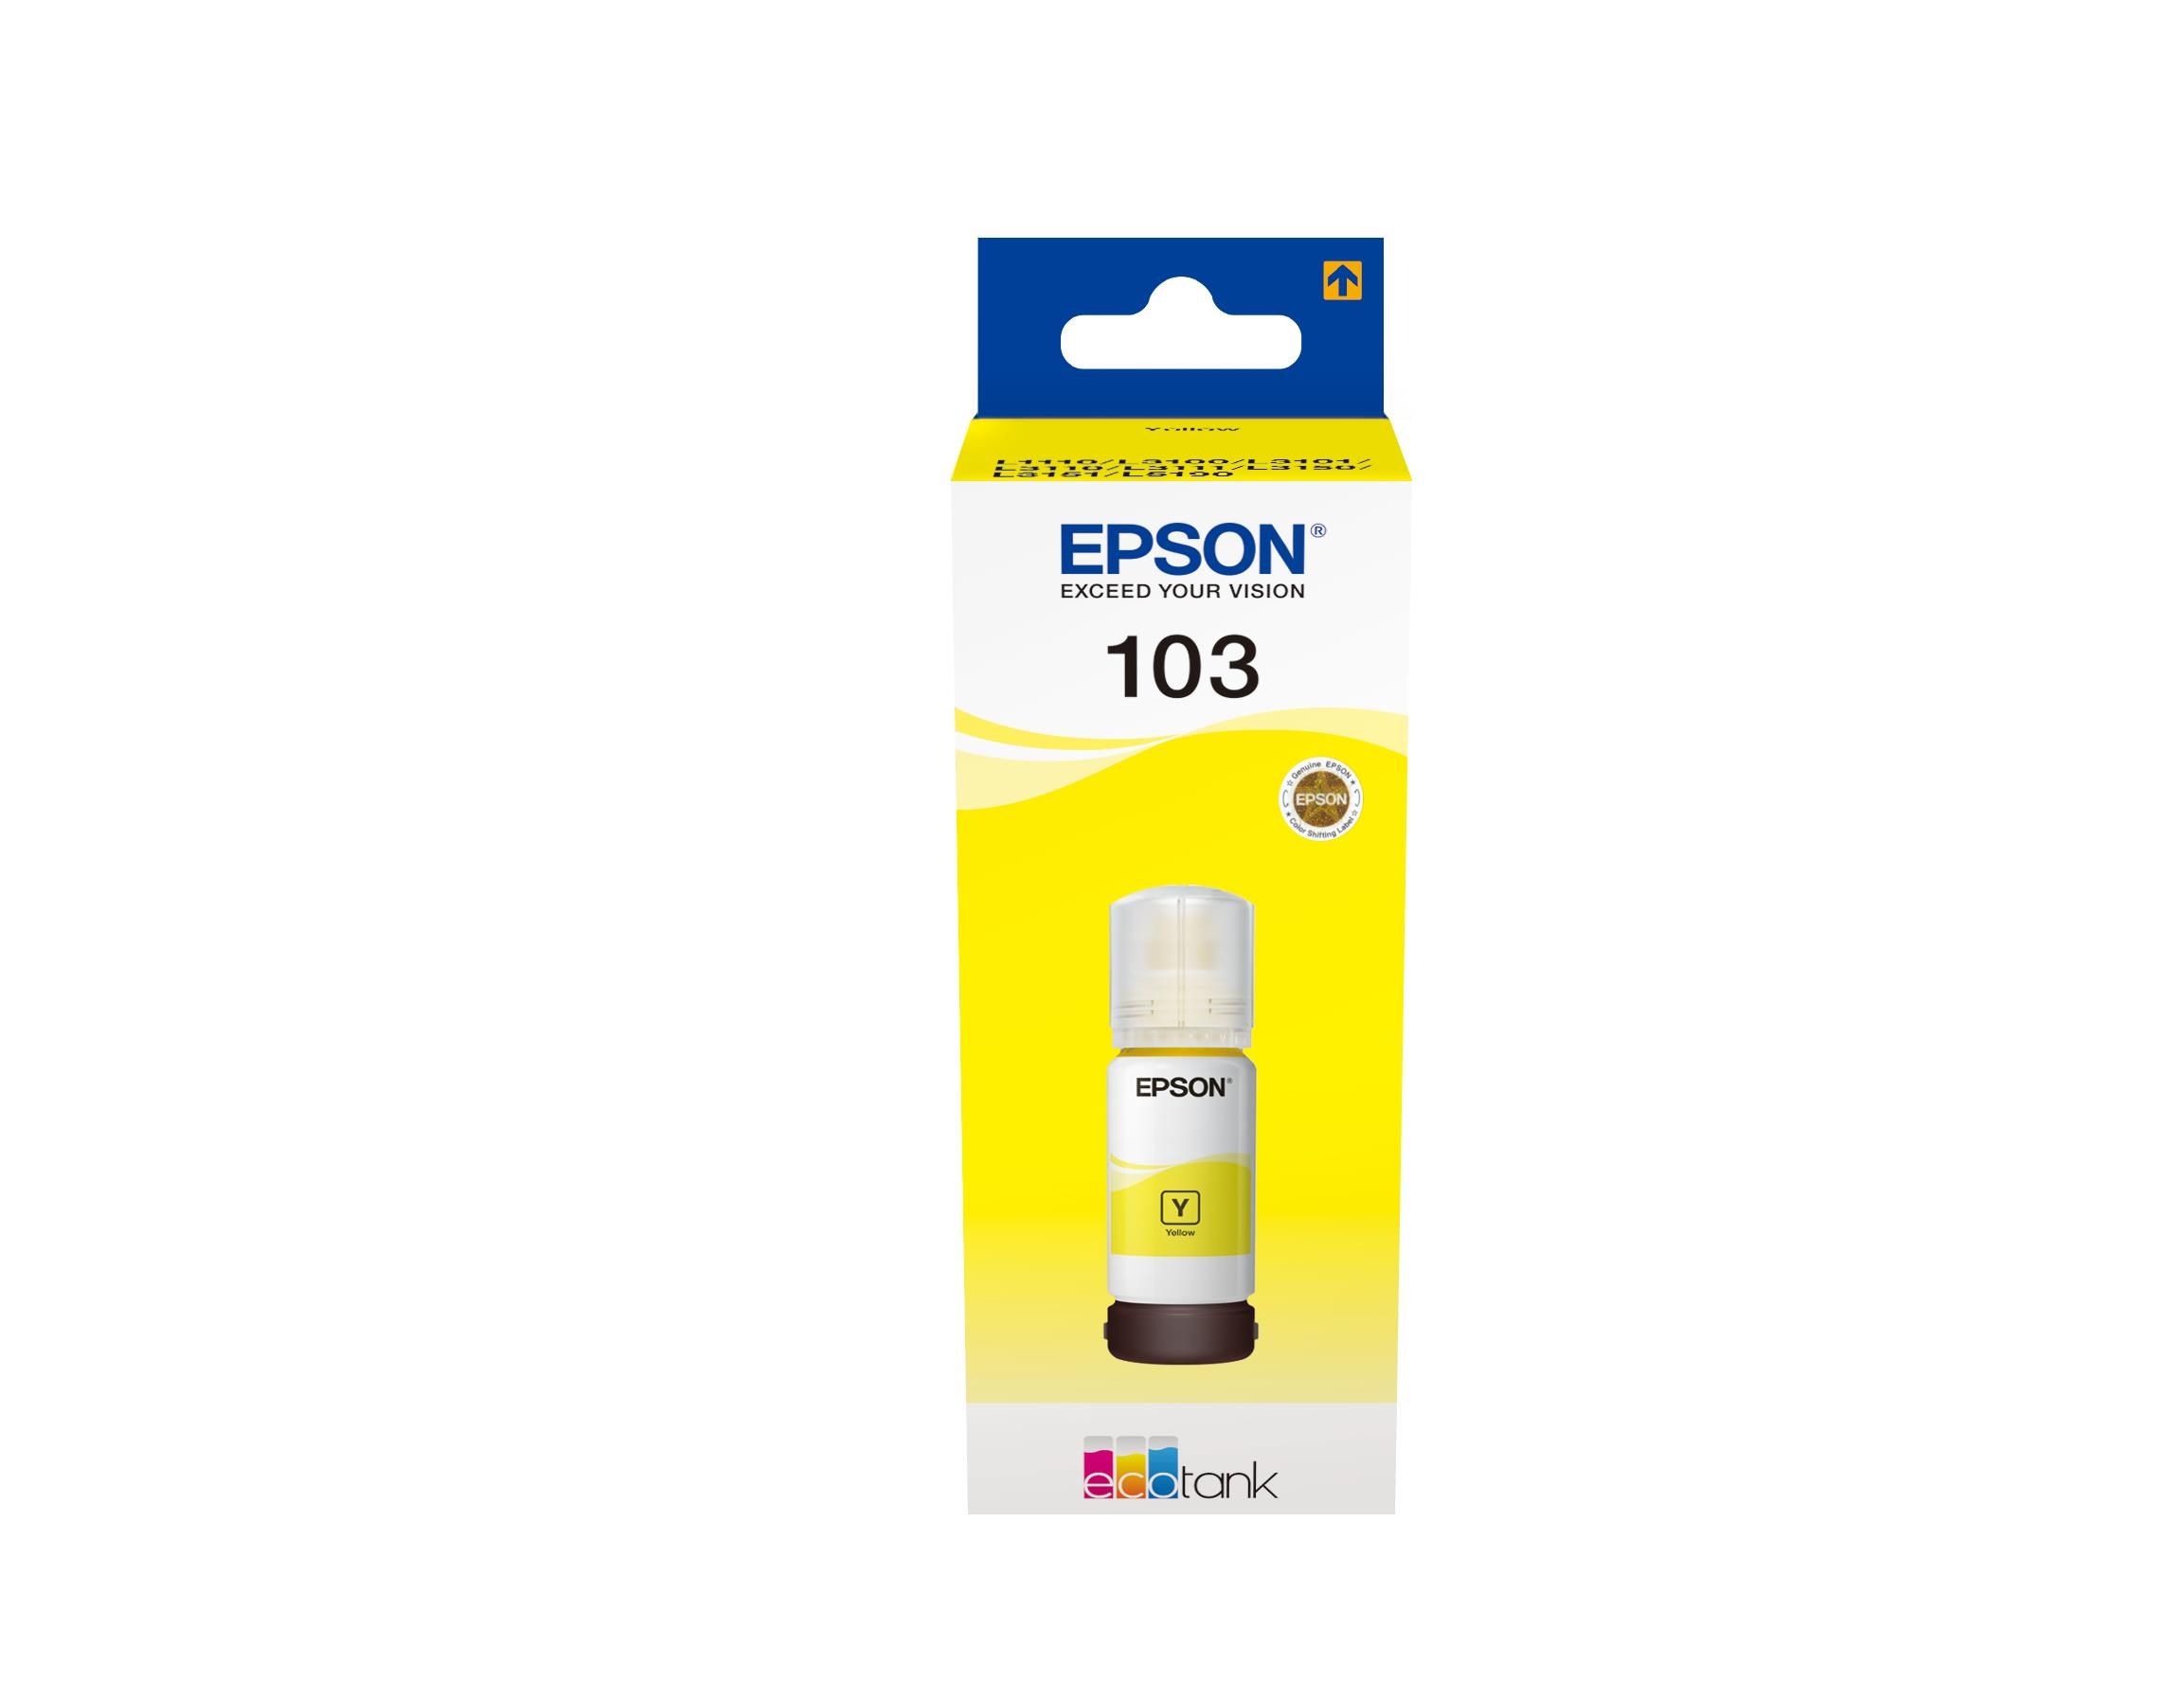 Epson Serie 103 EcoTank